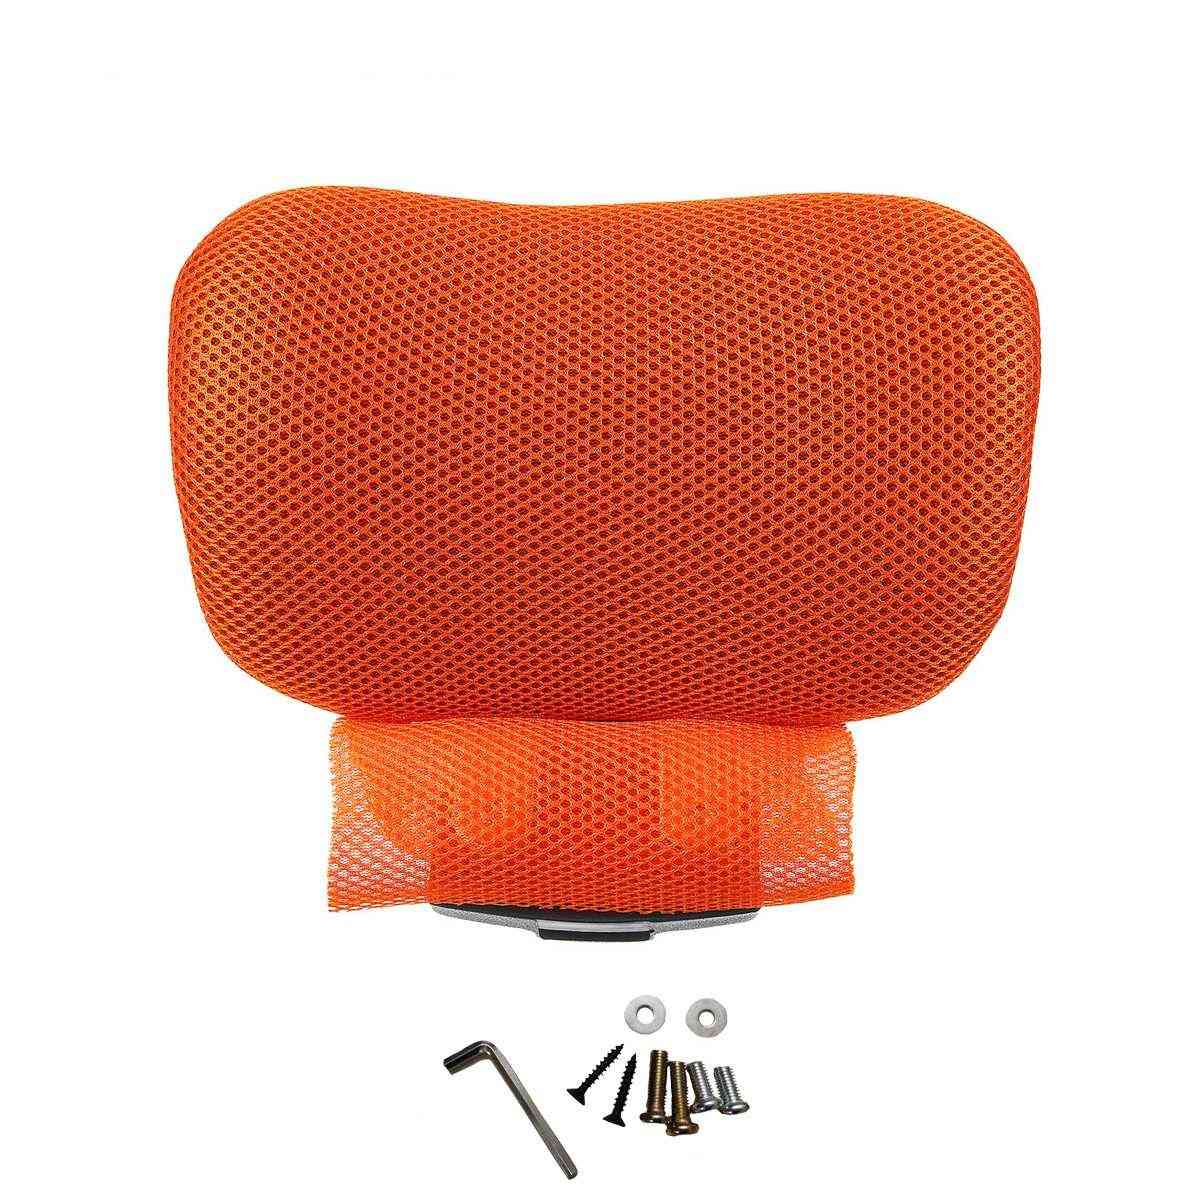 Adjustable Headrest Chair Headrest Pillow For Office Ergonomic Neck Protection